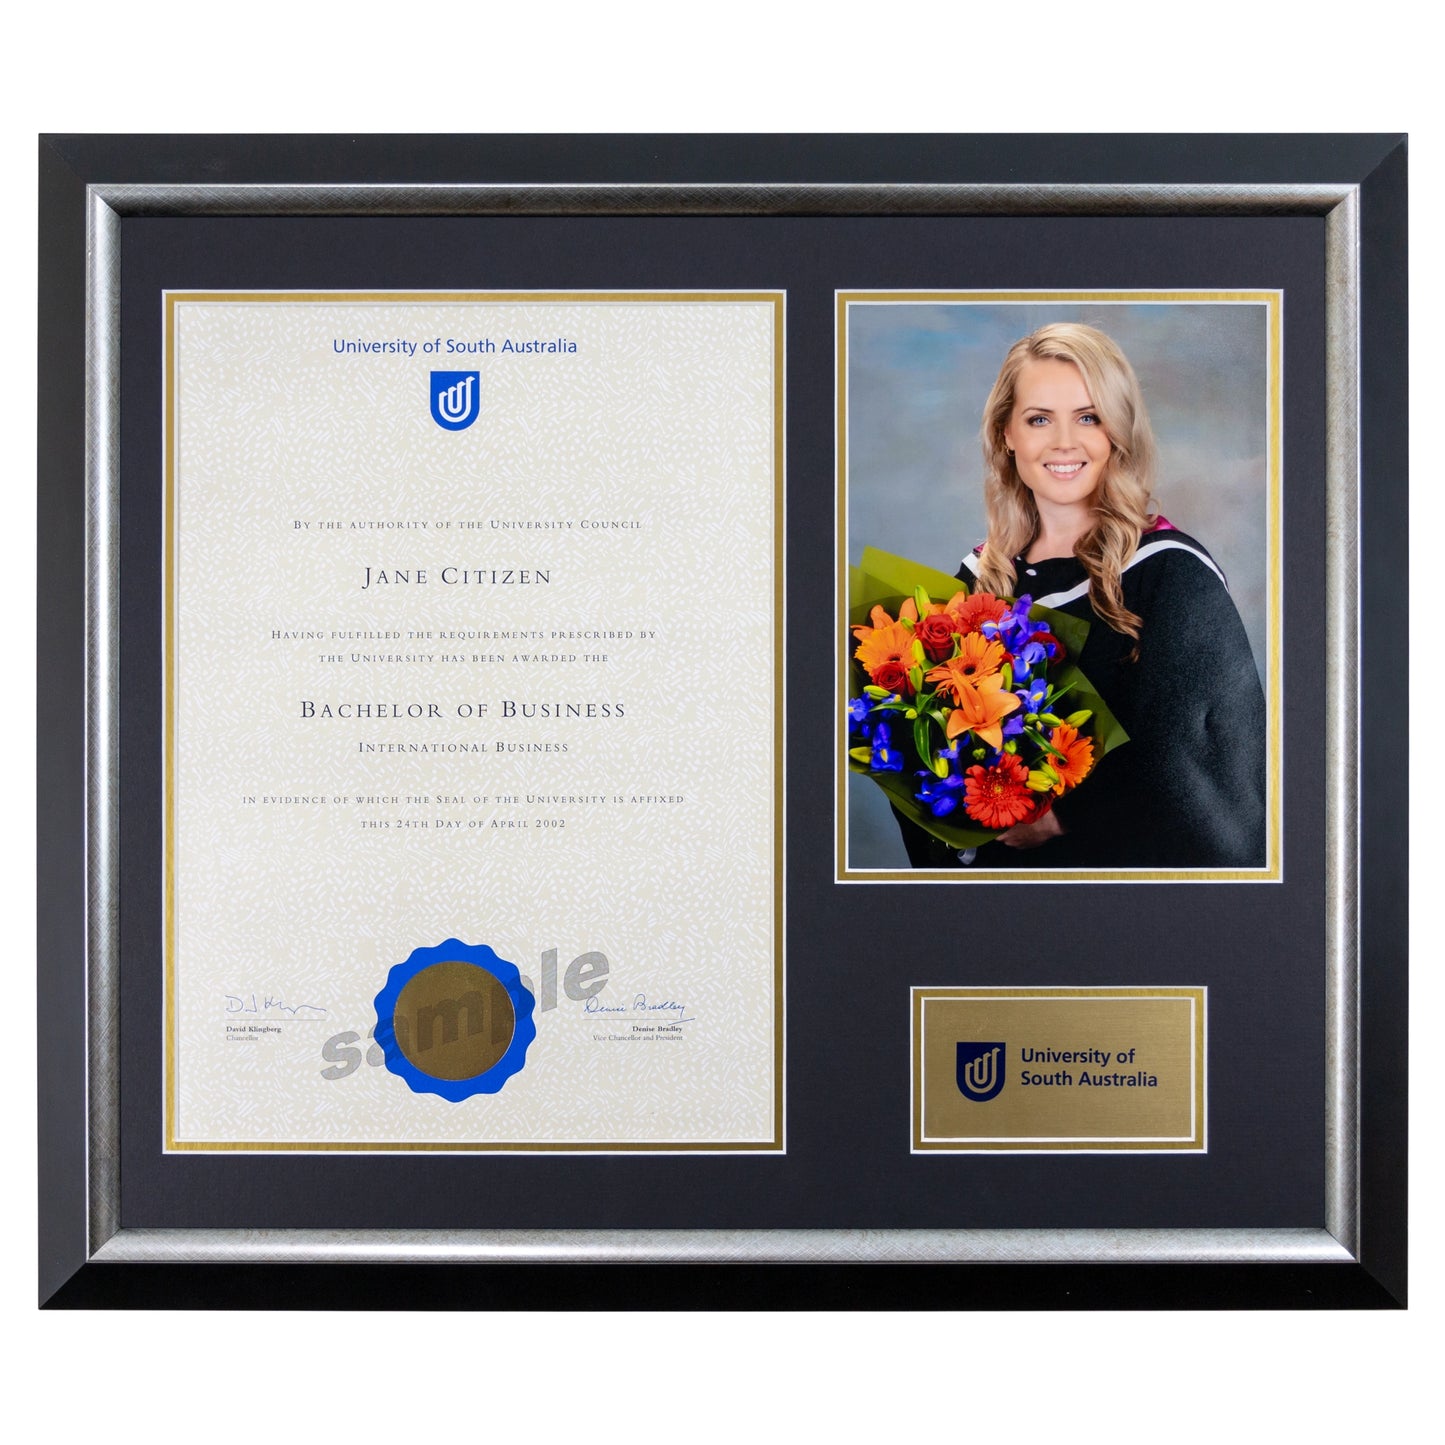 University of South Australia Photo Certificate Frame - Premium Silver